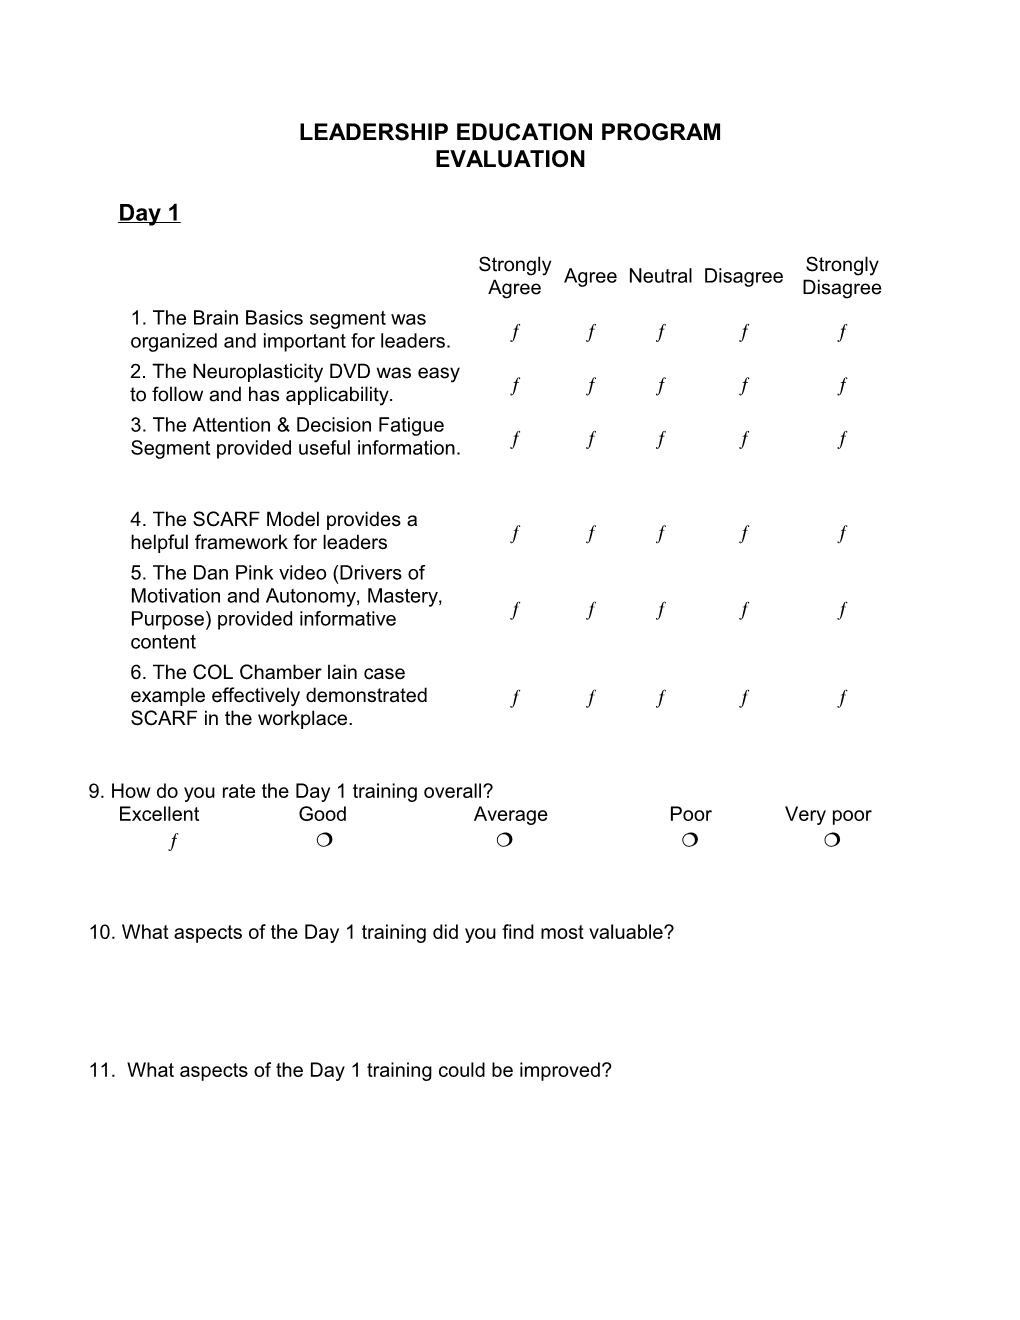 Sample Training Evaluation Form (Leadership Education Program)